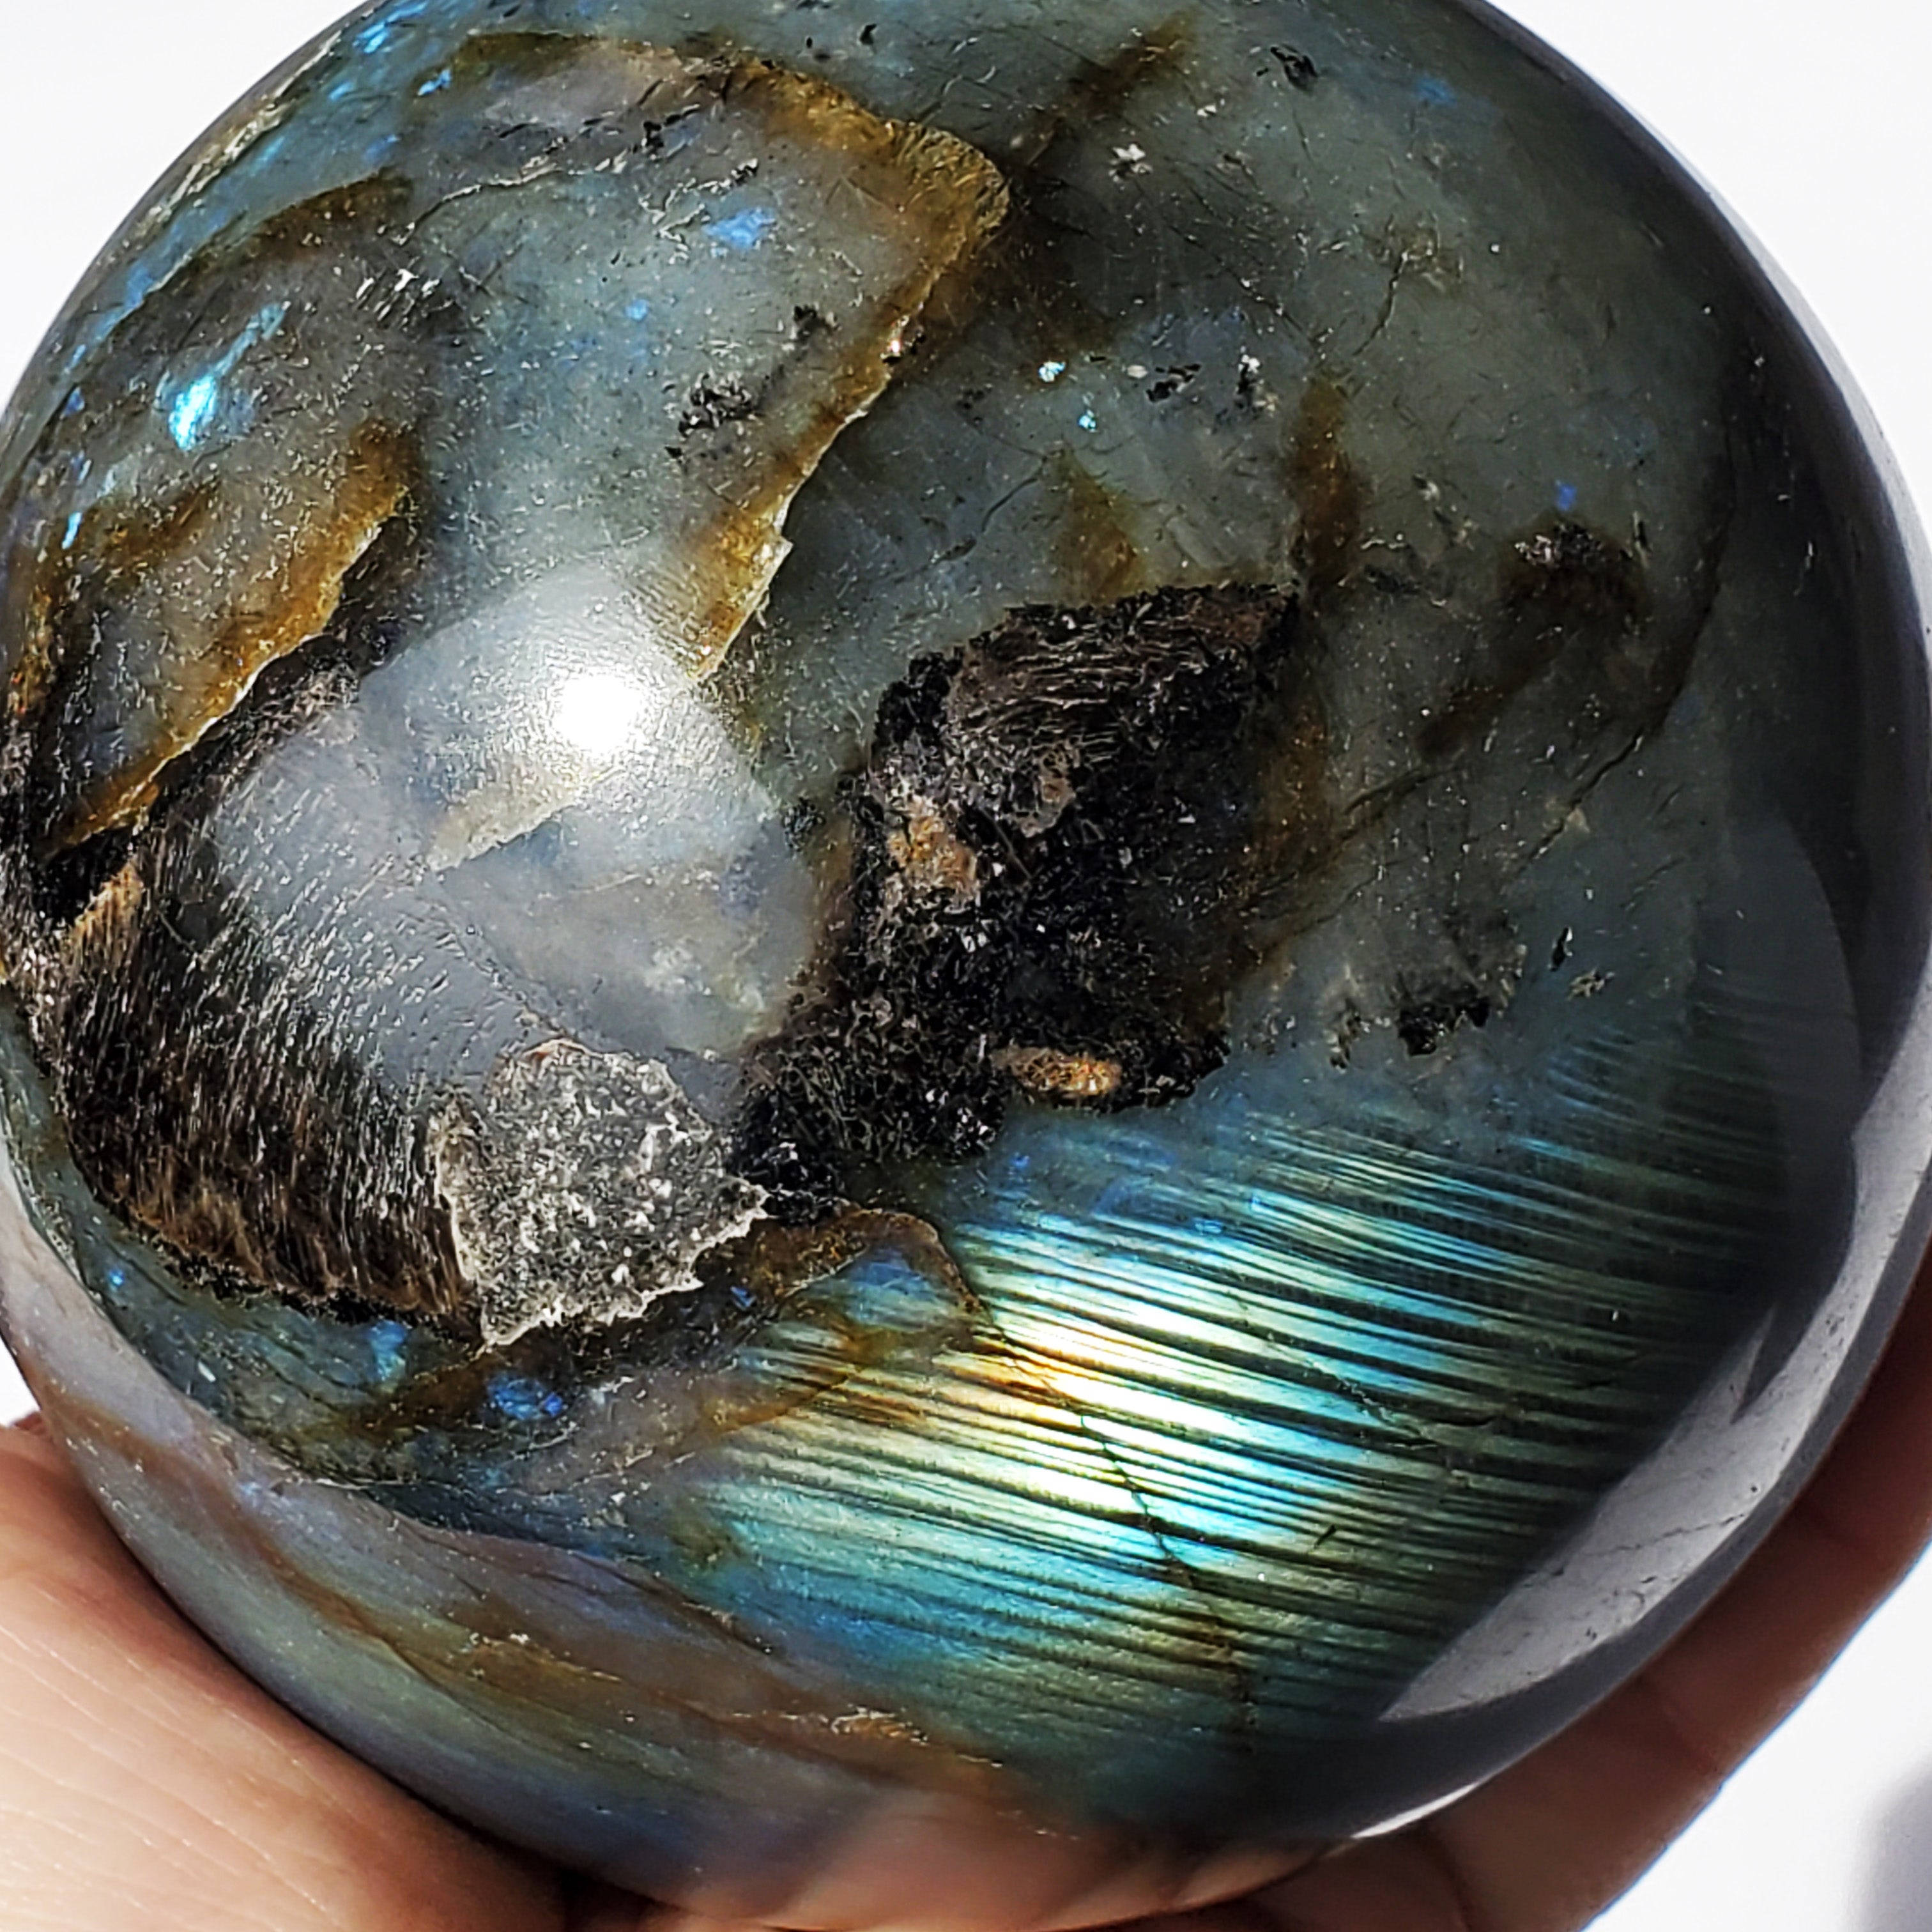 Labradorite Sphere - flashy - extra large 3 7/8"